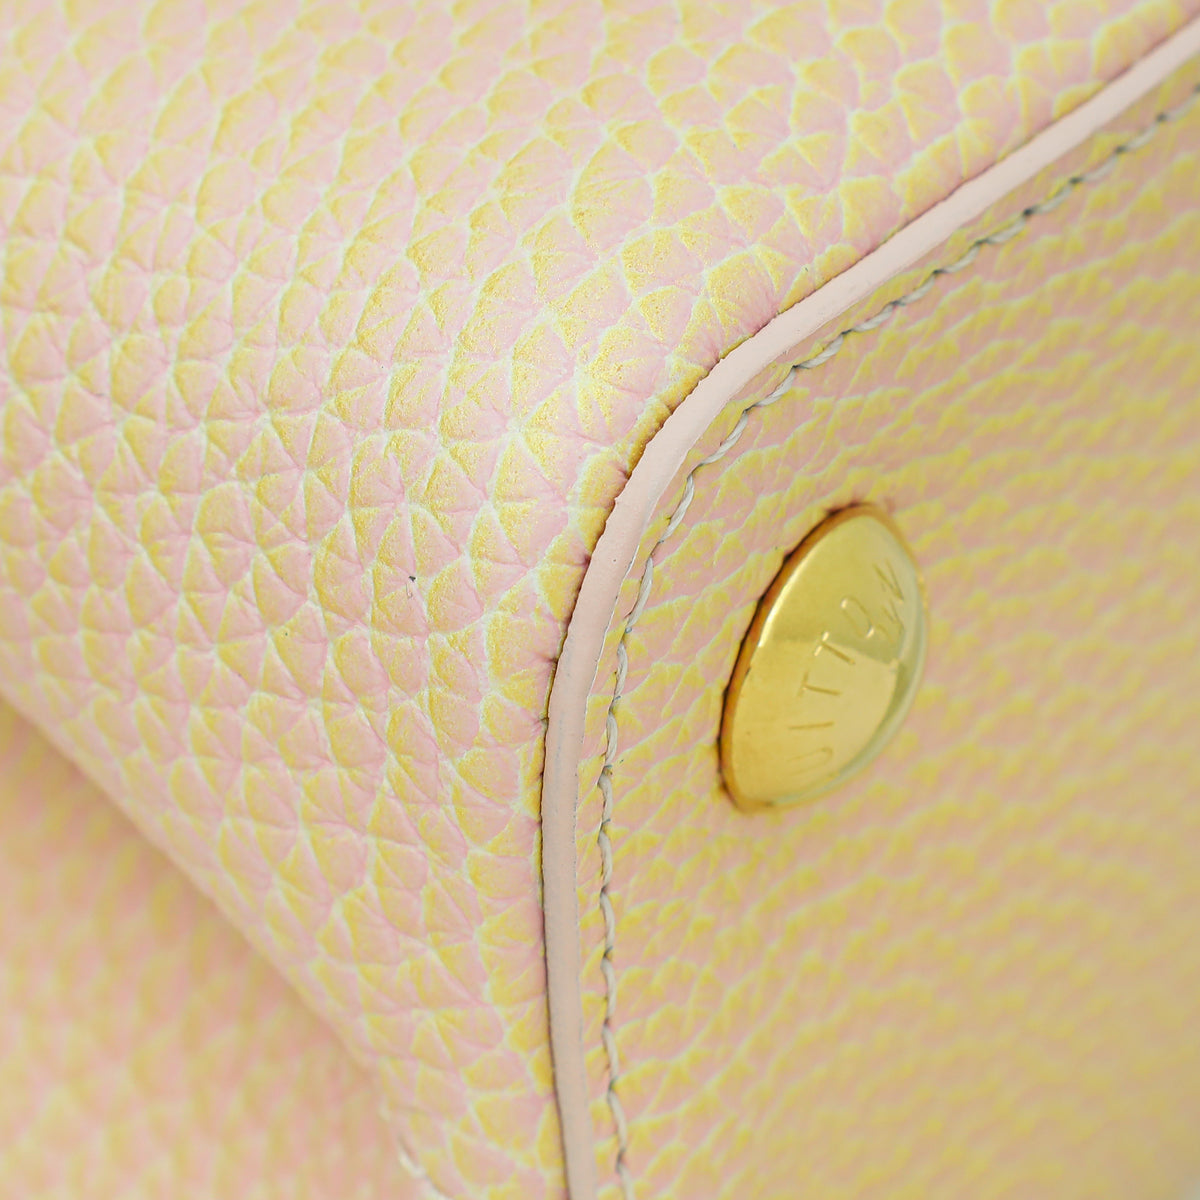 Louis Vuitton Bicolor Capucines BB Bag